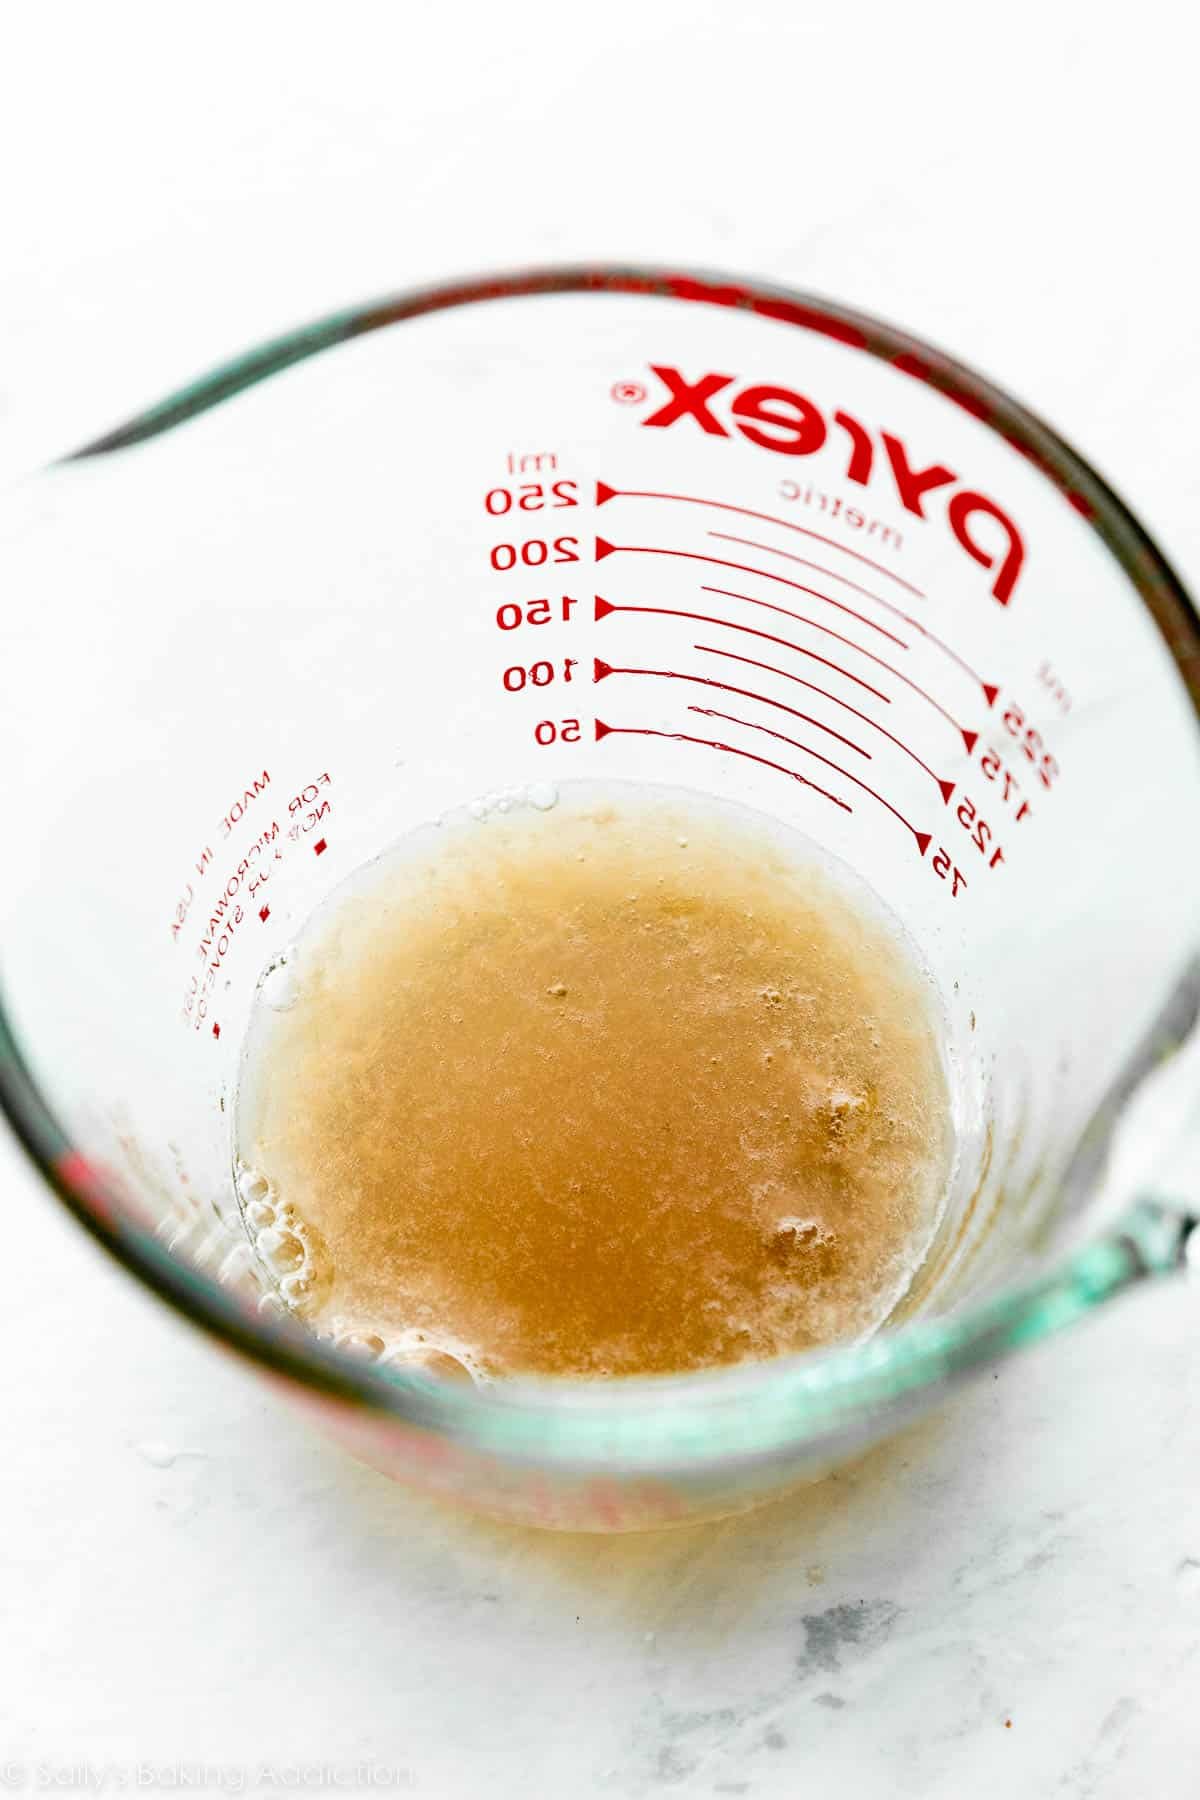 brown liquid in liquid measuring cup.